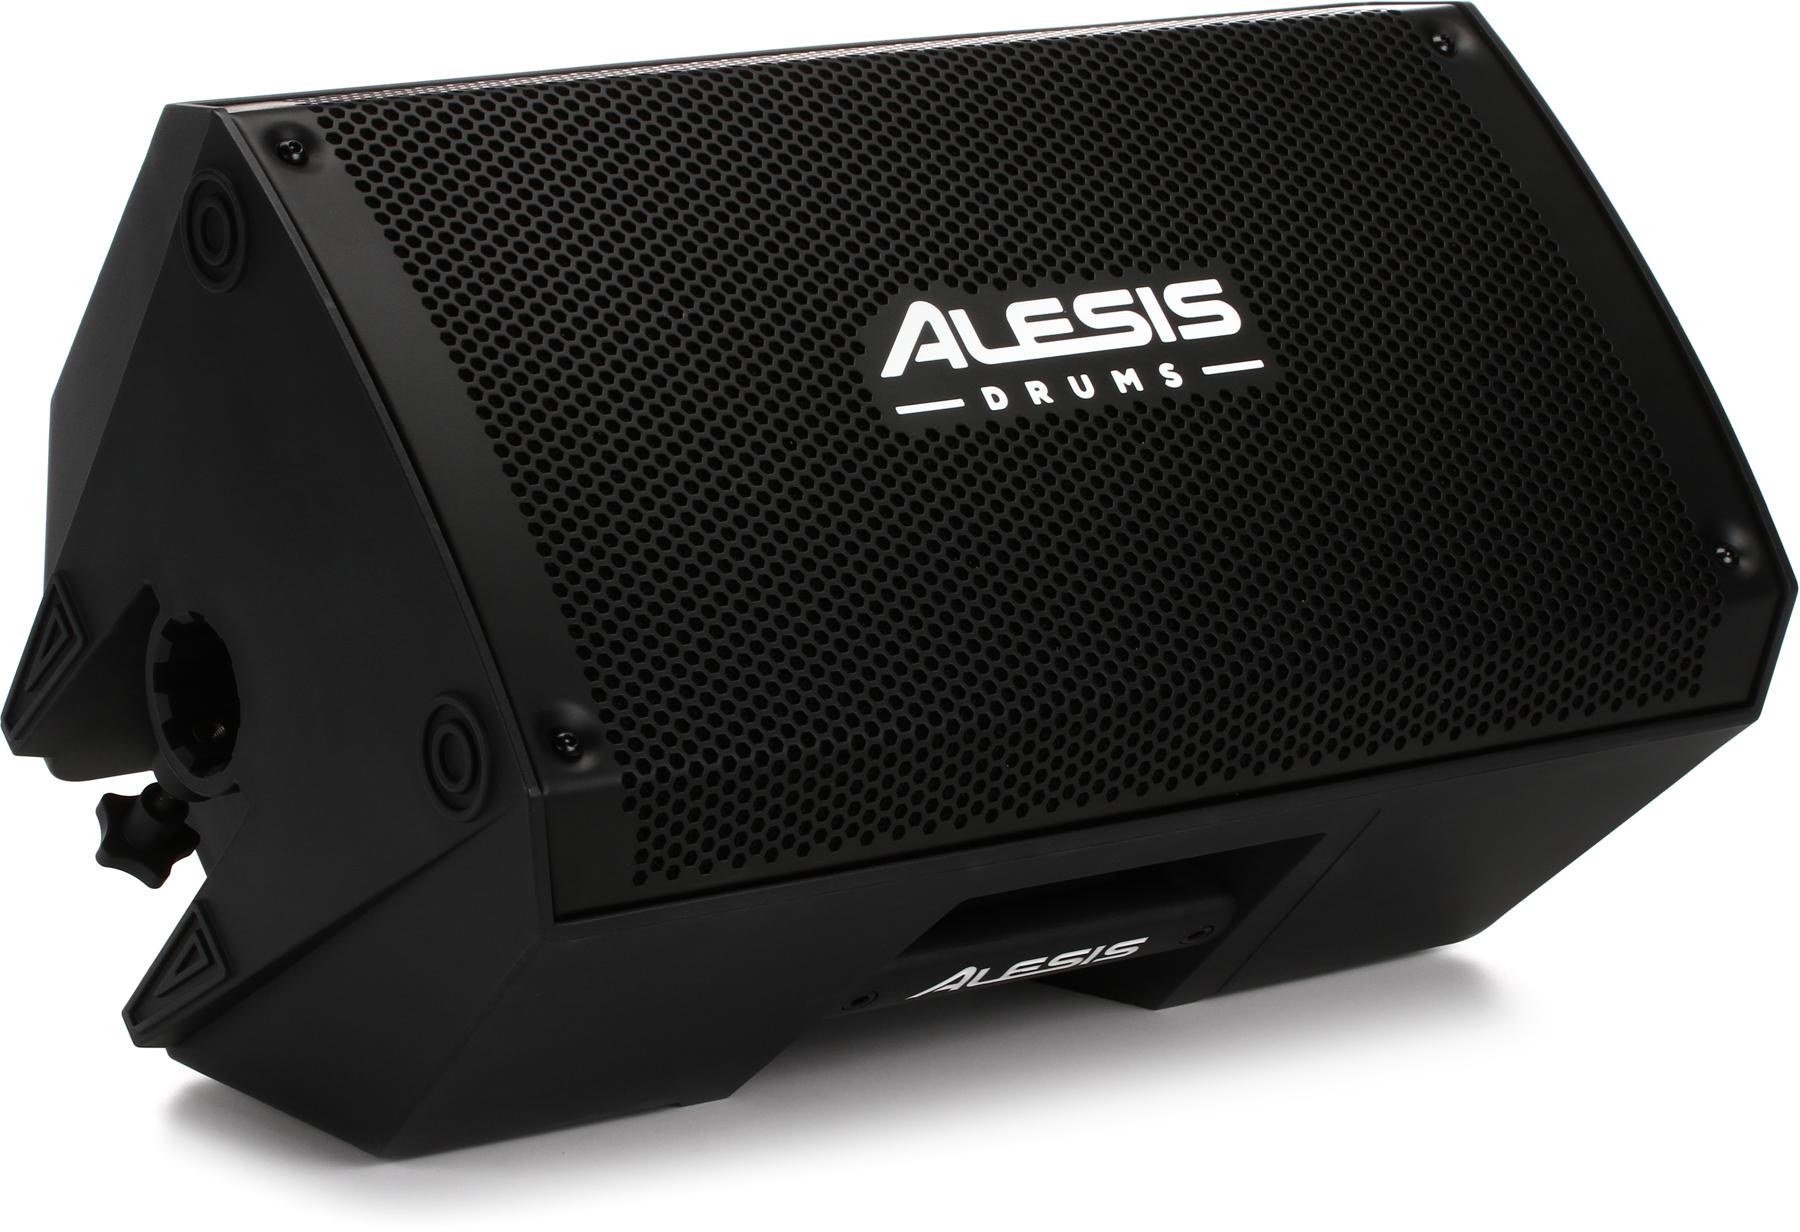 Alesis Strike Amp 8 2000-watt 1 x 8-inch Drum Amplifier